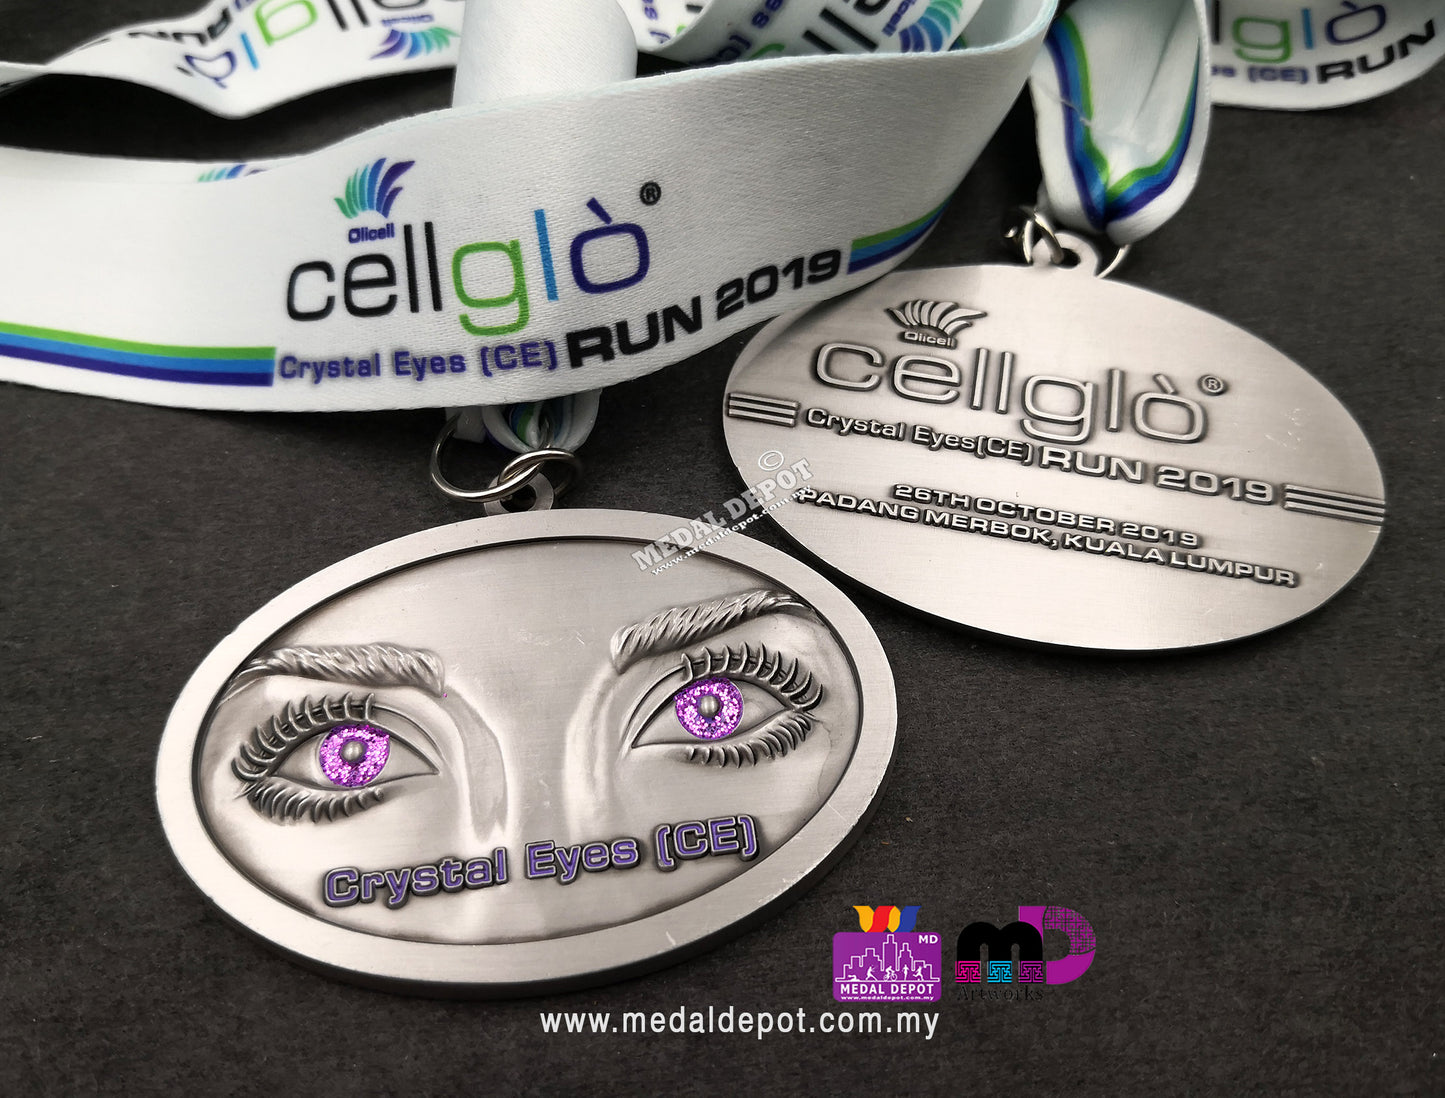 Cellglo Crystal Eyes Run 2019